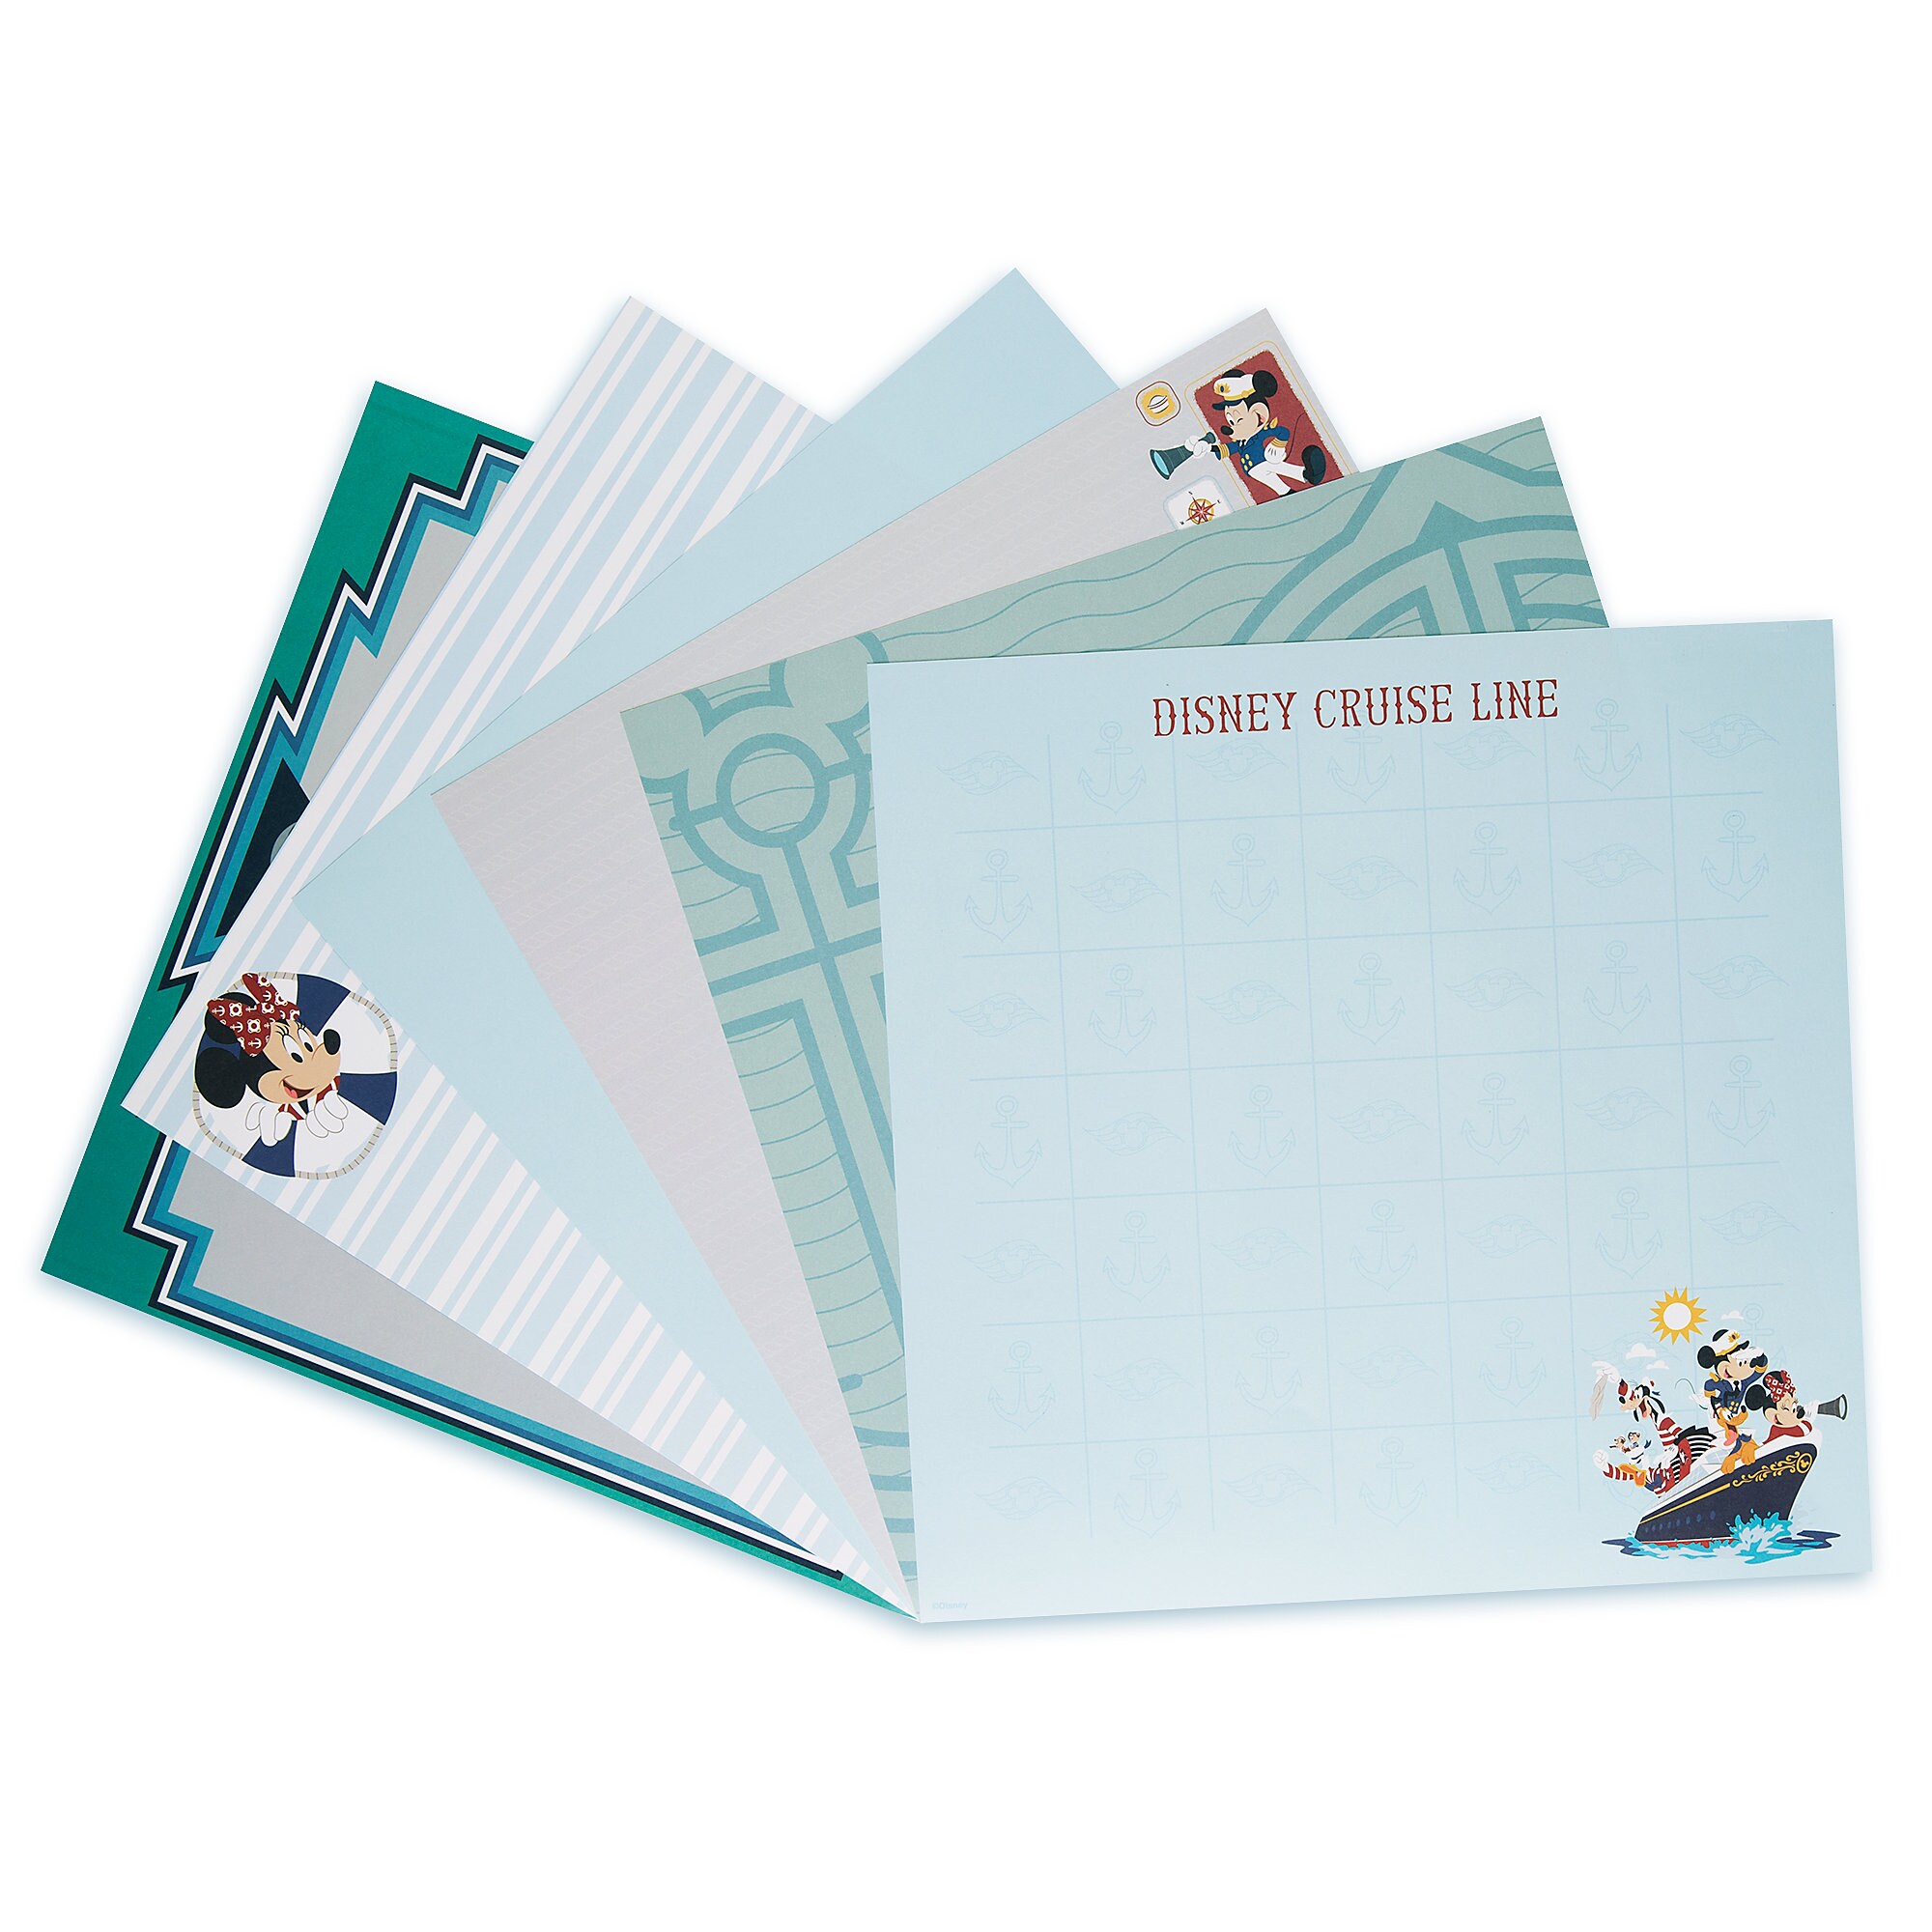 Disney Cruise Line 2019 Scrapbook Kit